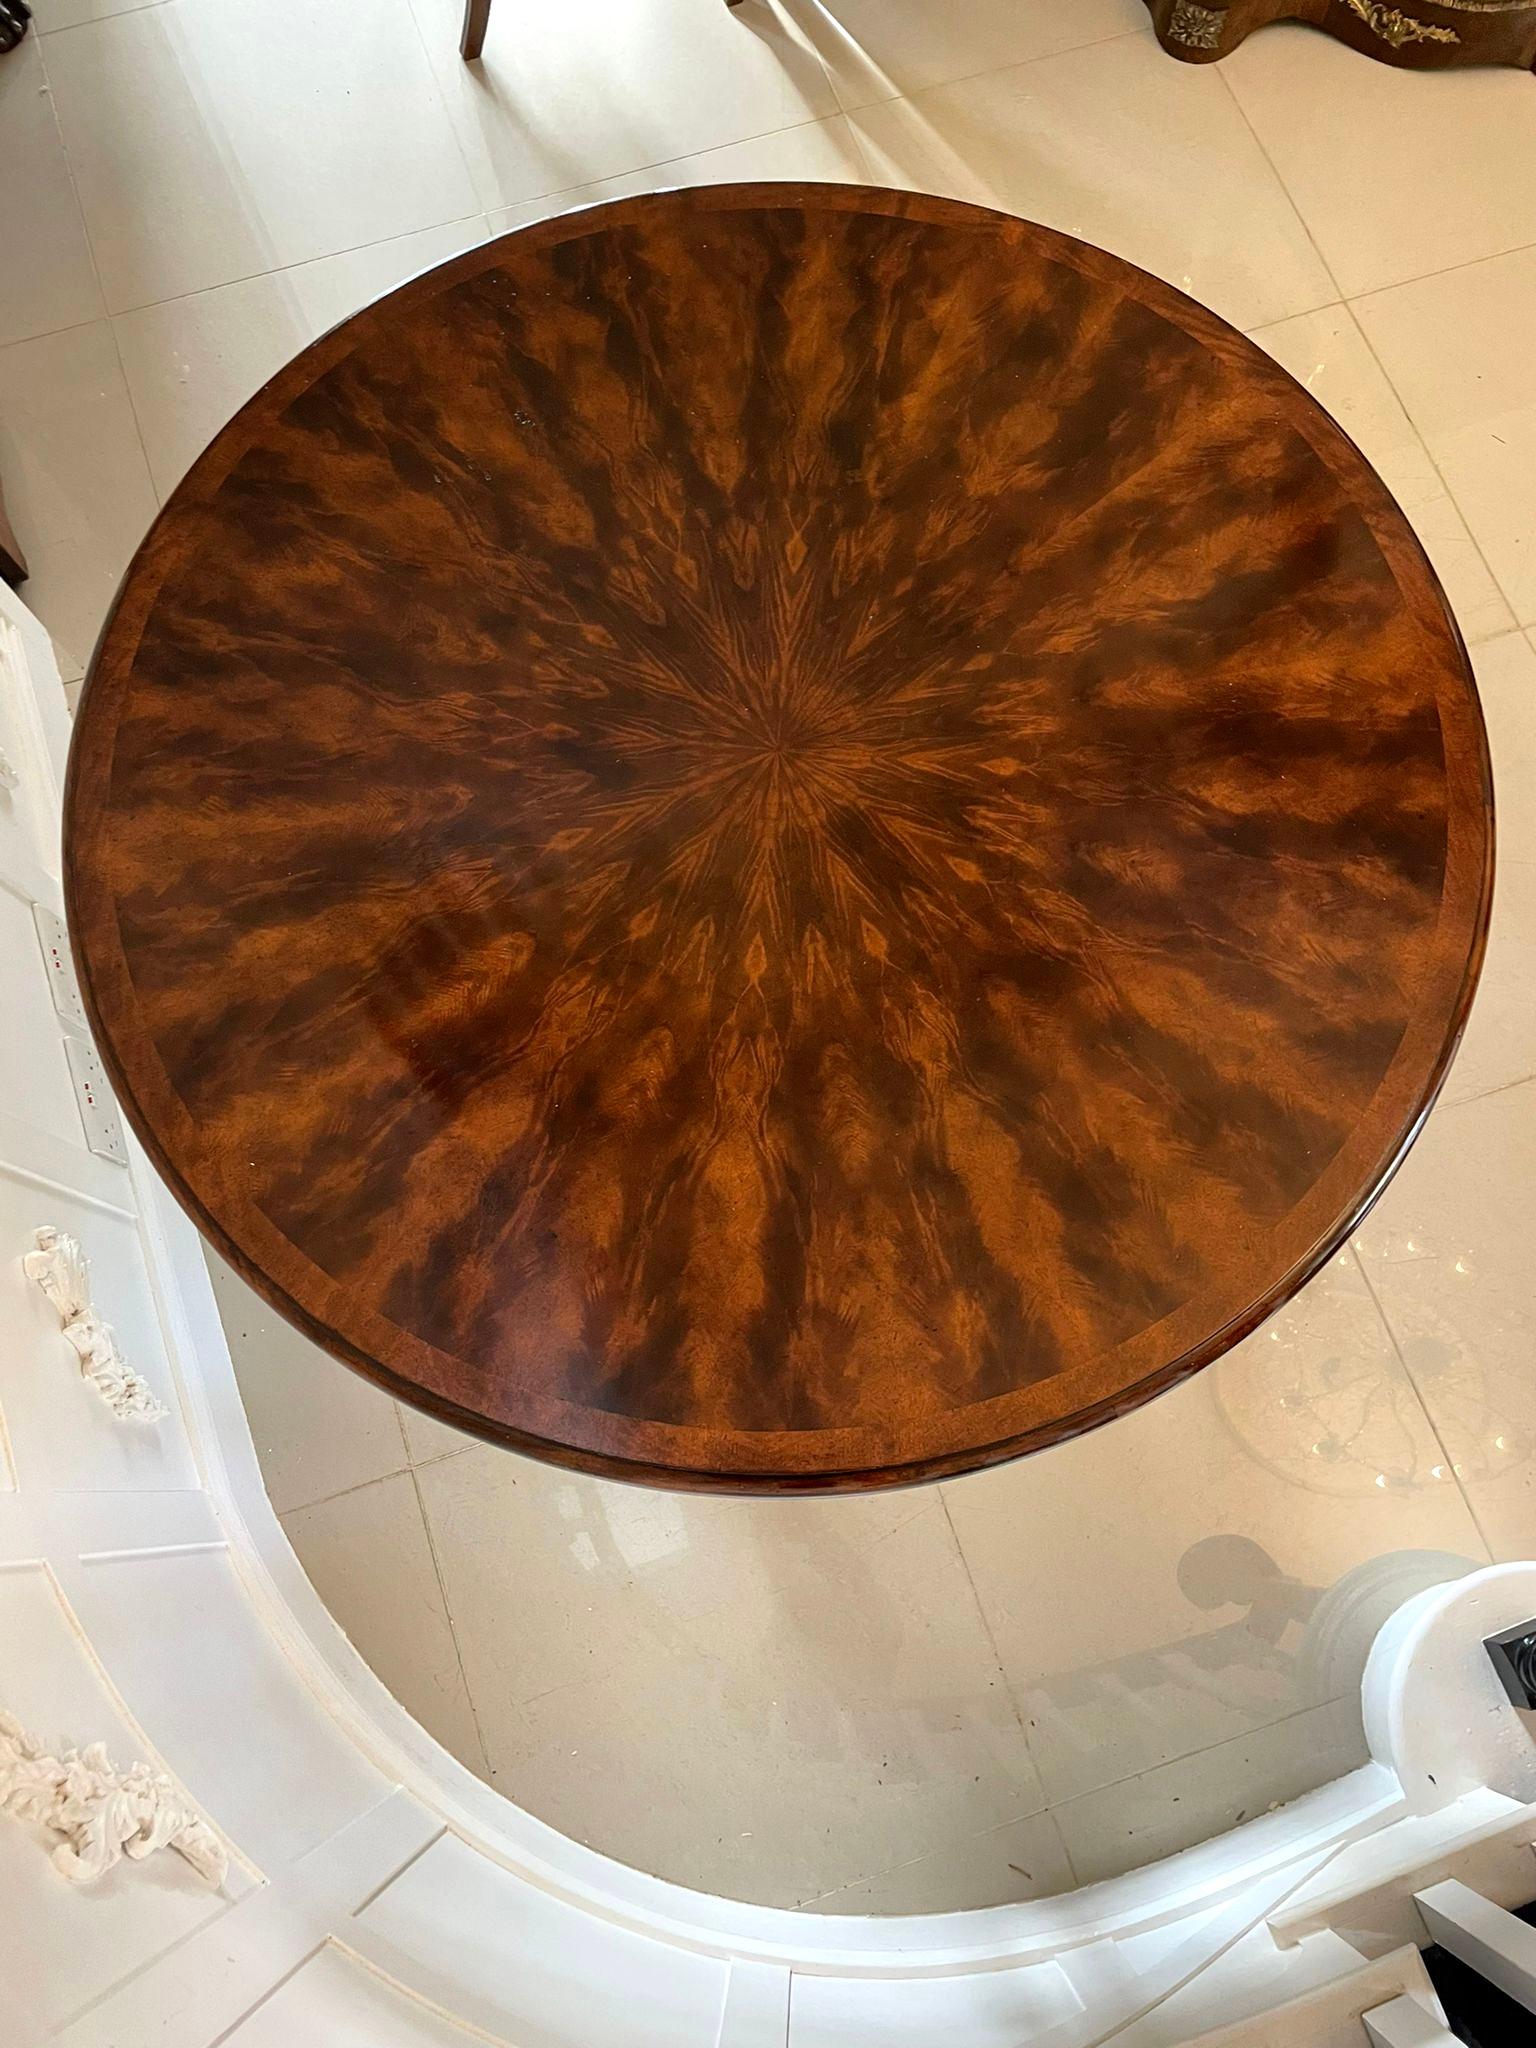 Superb Quality Figured Mahogany Circular Extending Dining Table 75 x 188 x 188cm 12